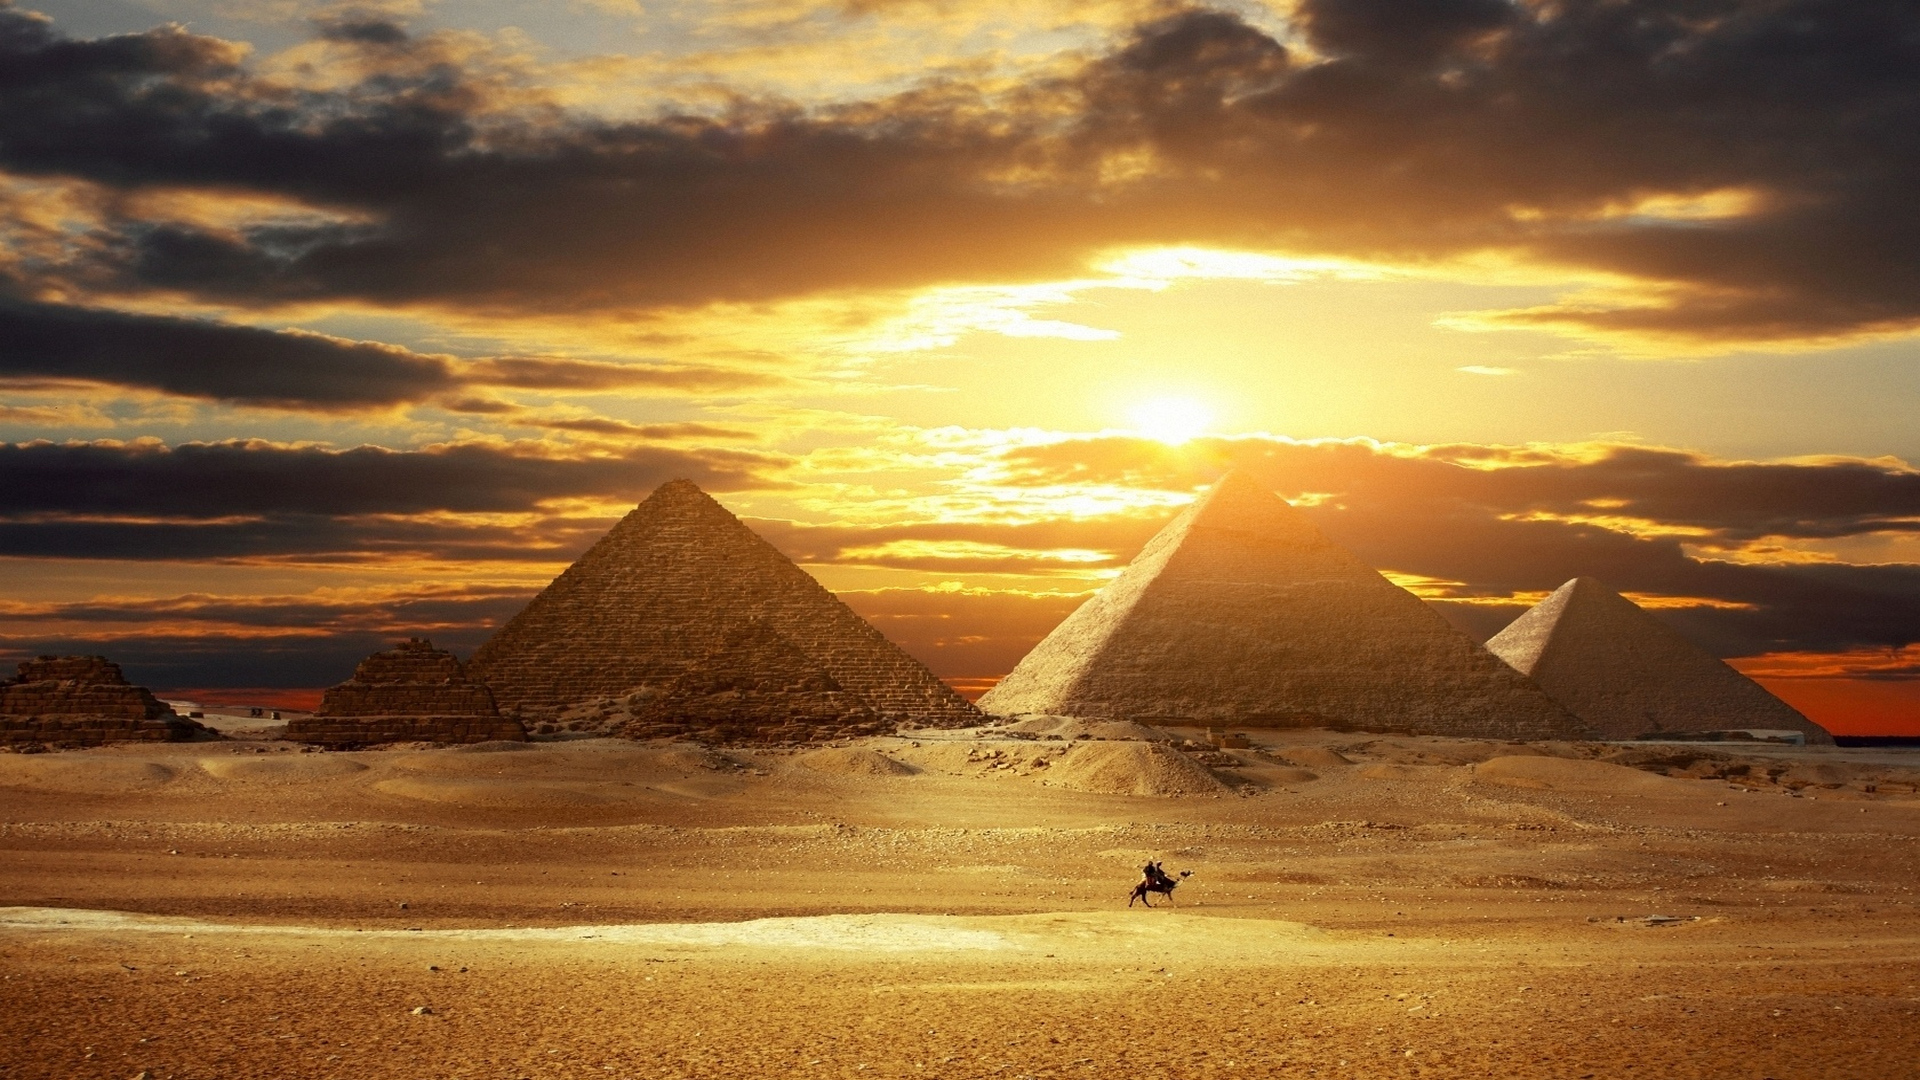 A captivating pyramid against a beautiful backdrop.